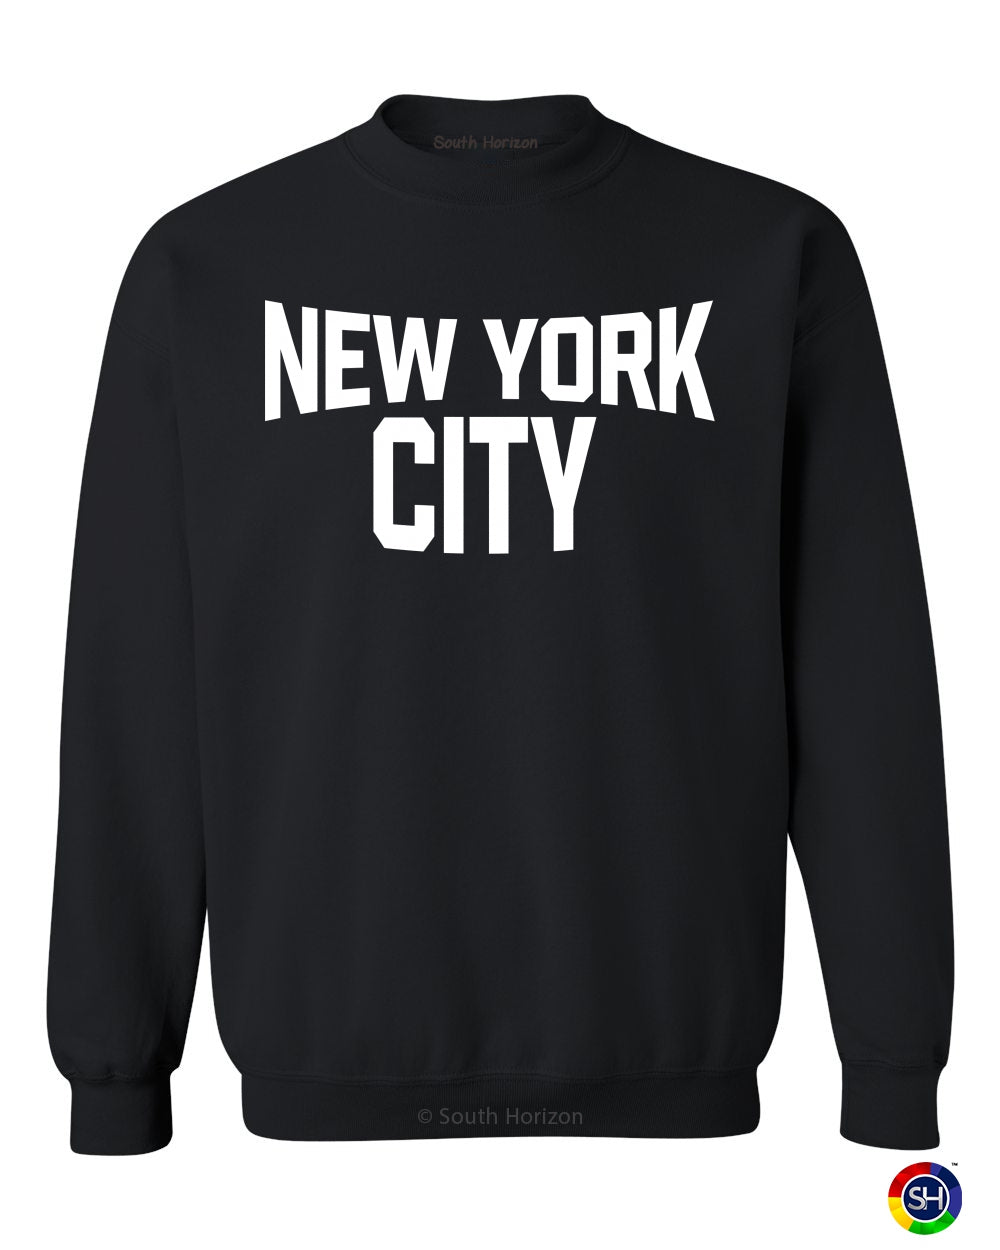 New York City on SweatShirt